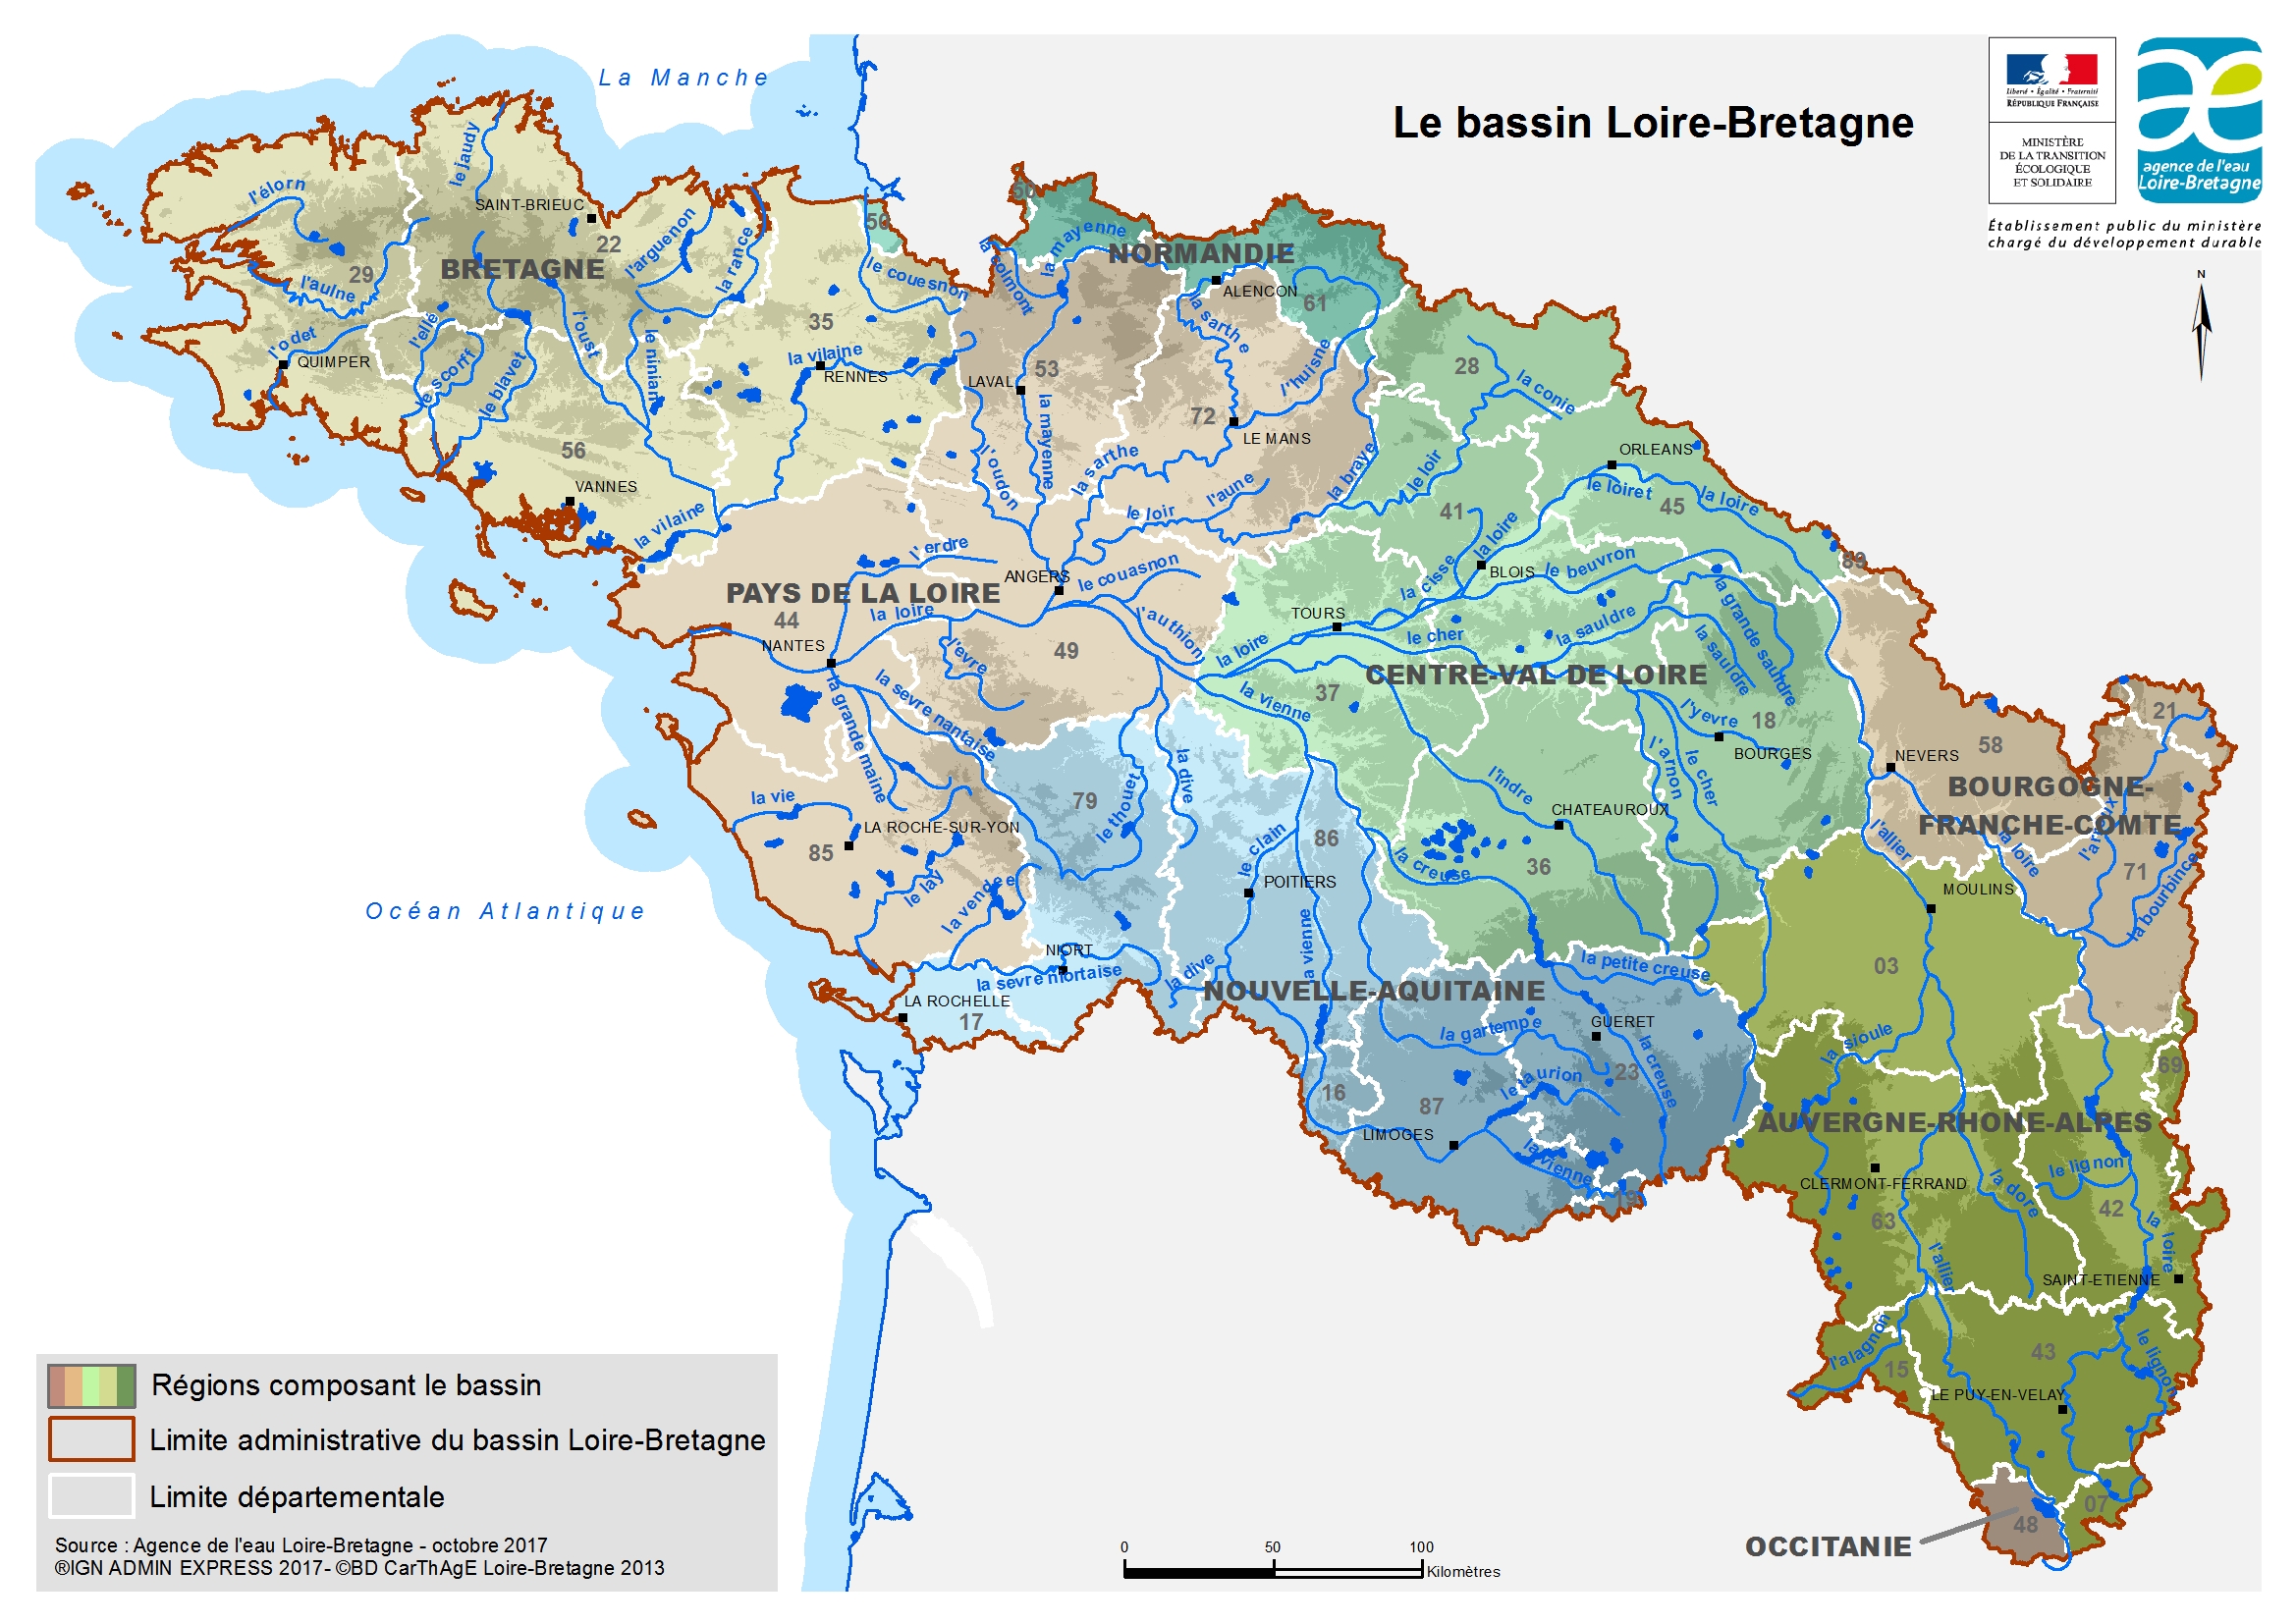 Le bassin Loire-Bretagne